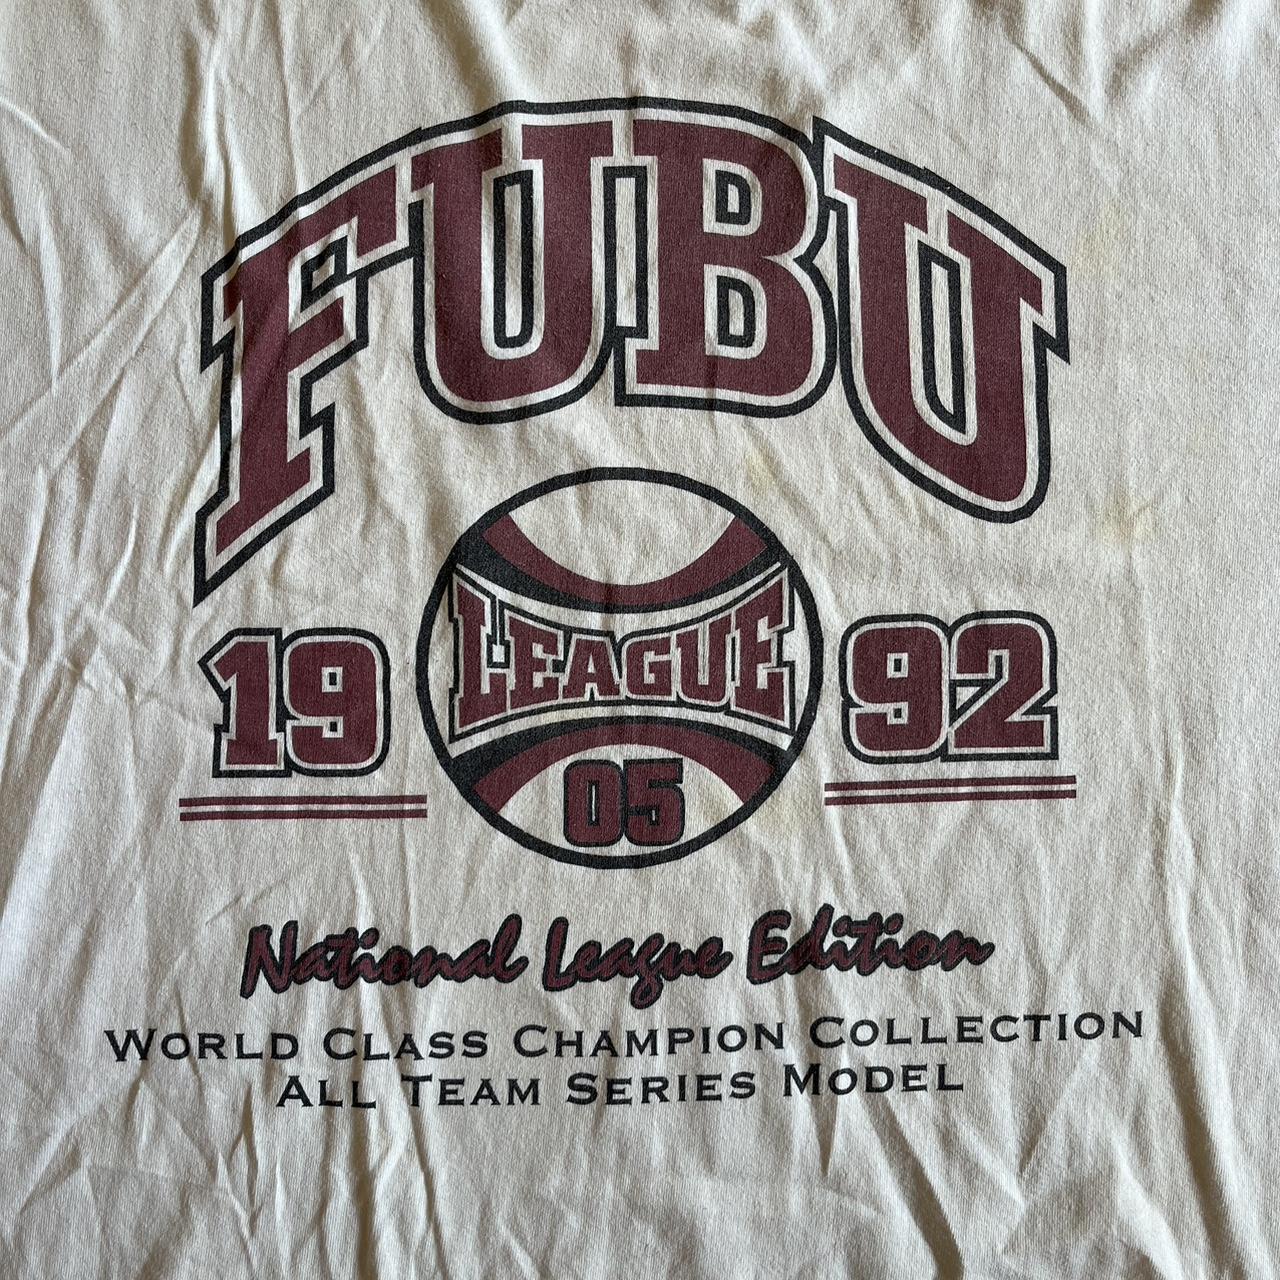 FUBU Men's White and Red T-shirt (2)